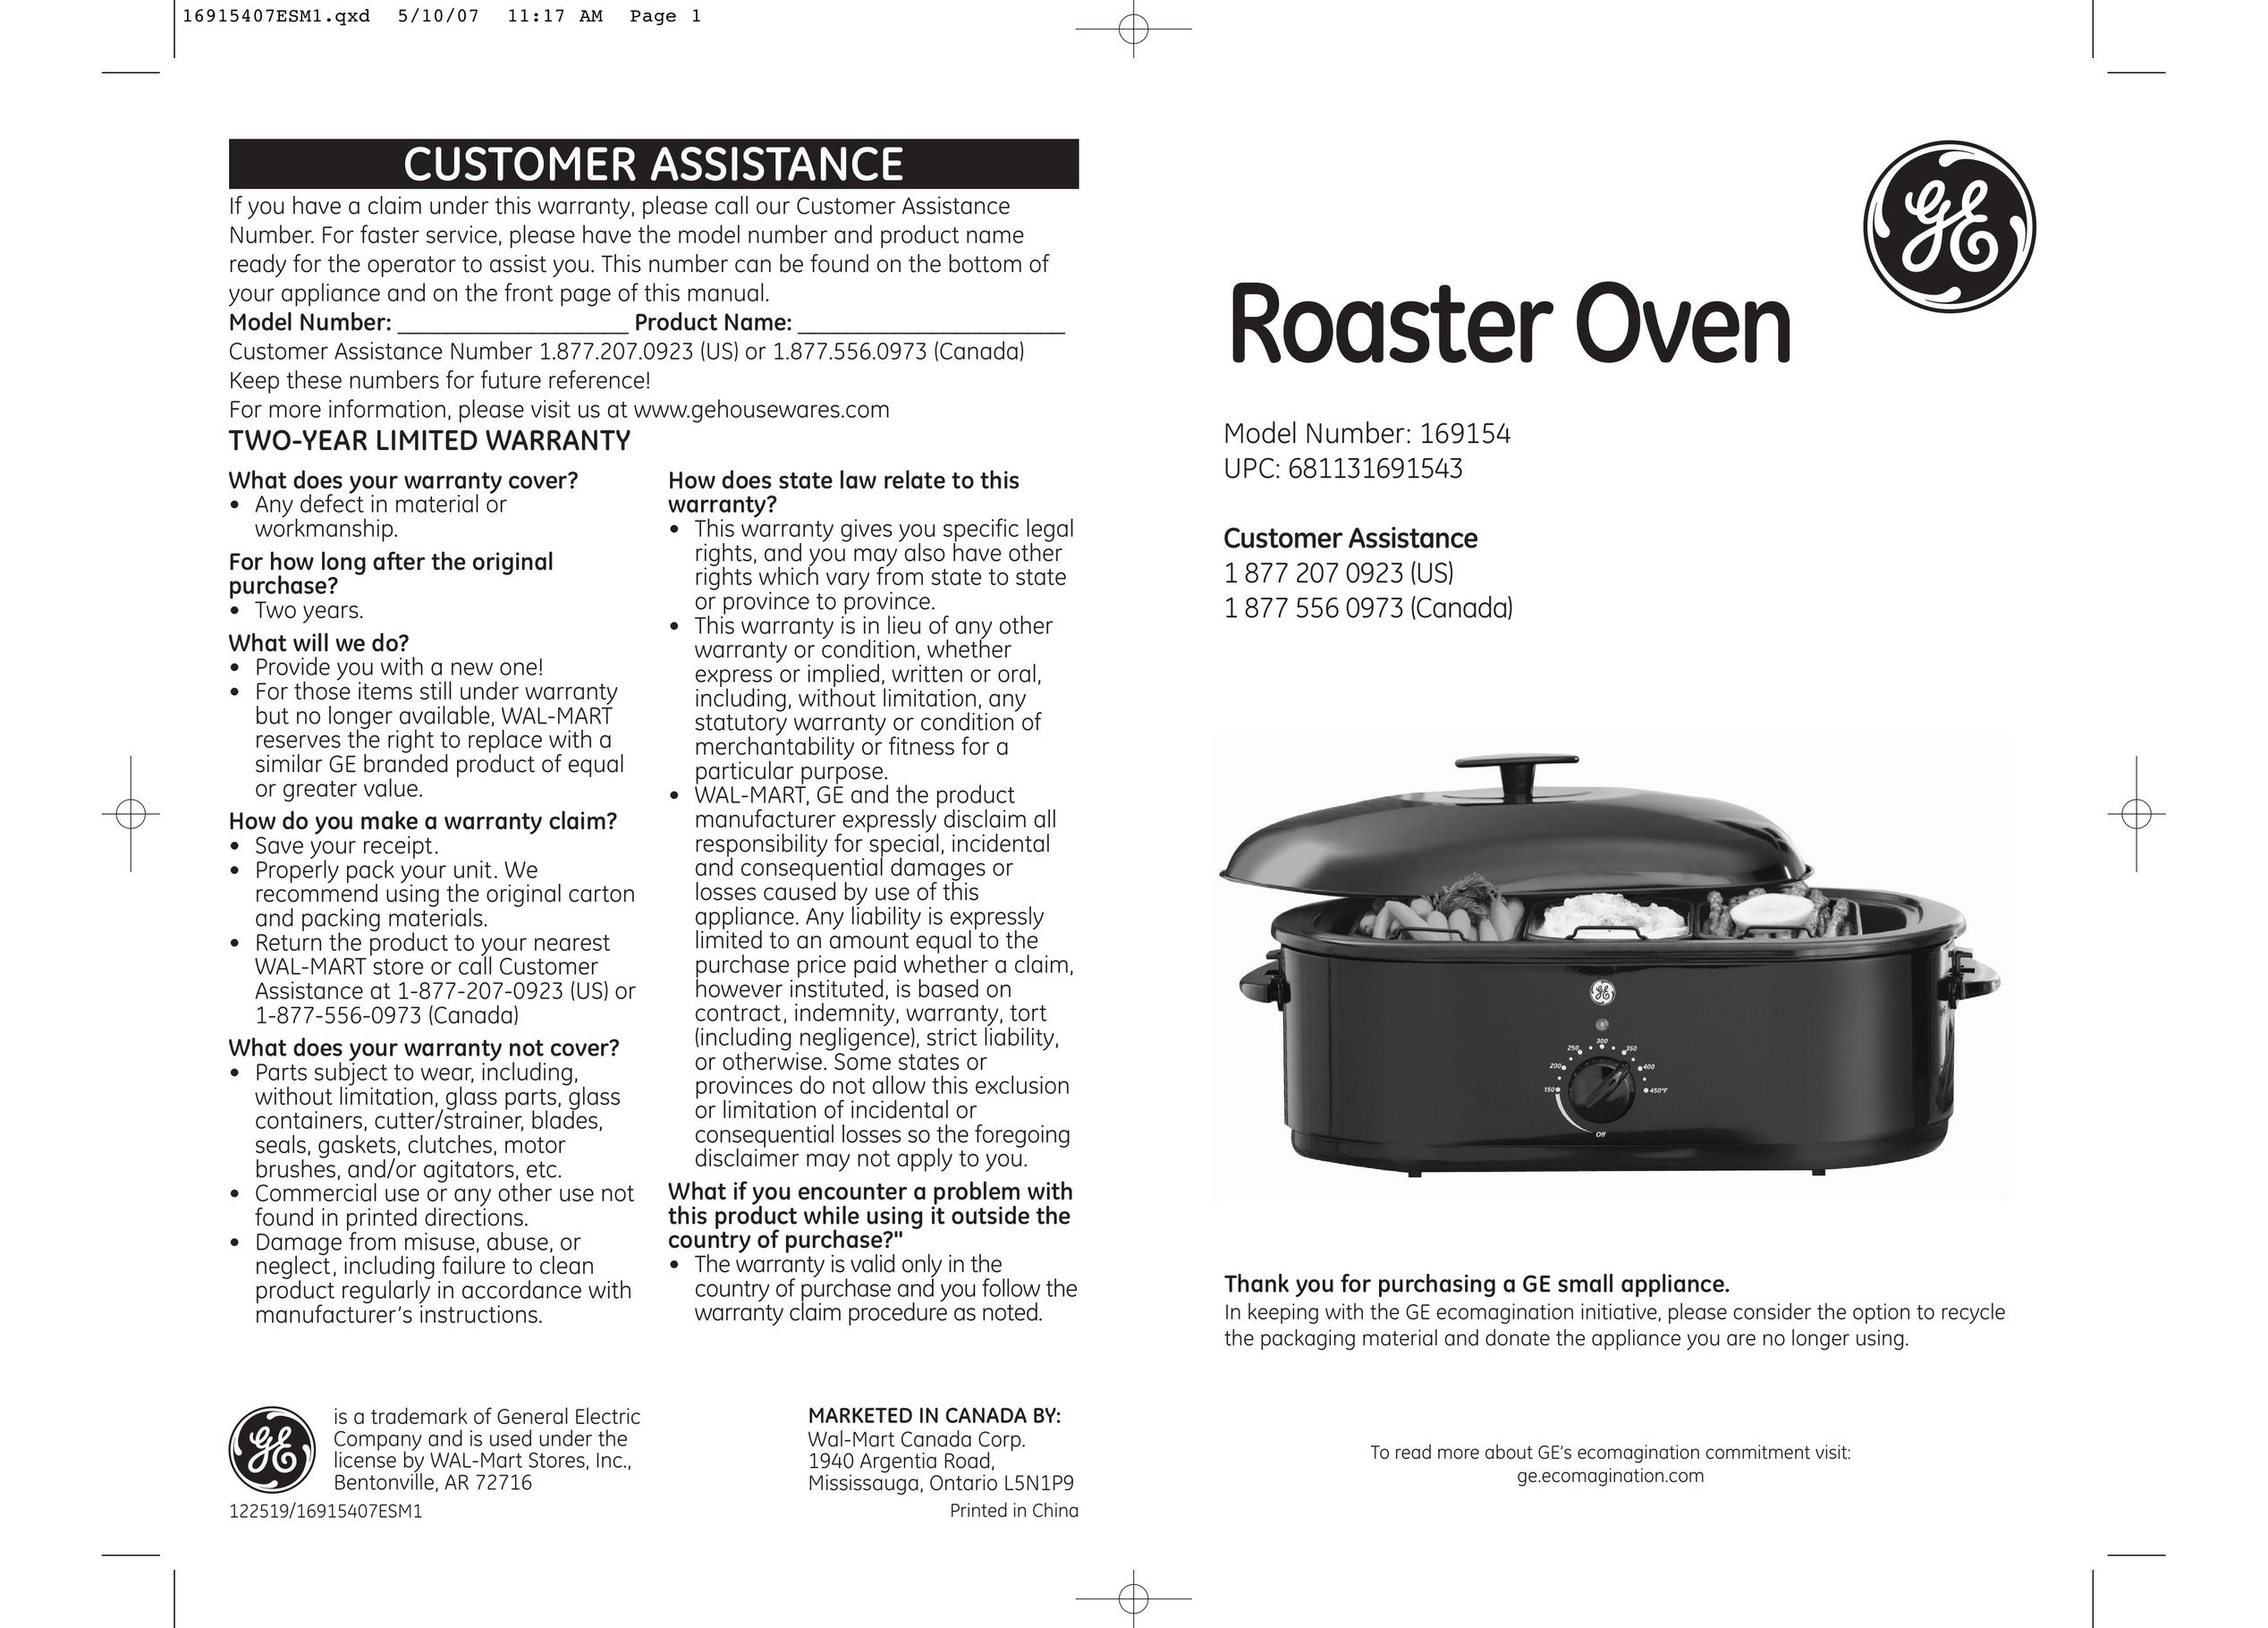 GE 681131691543 Oven User Manual